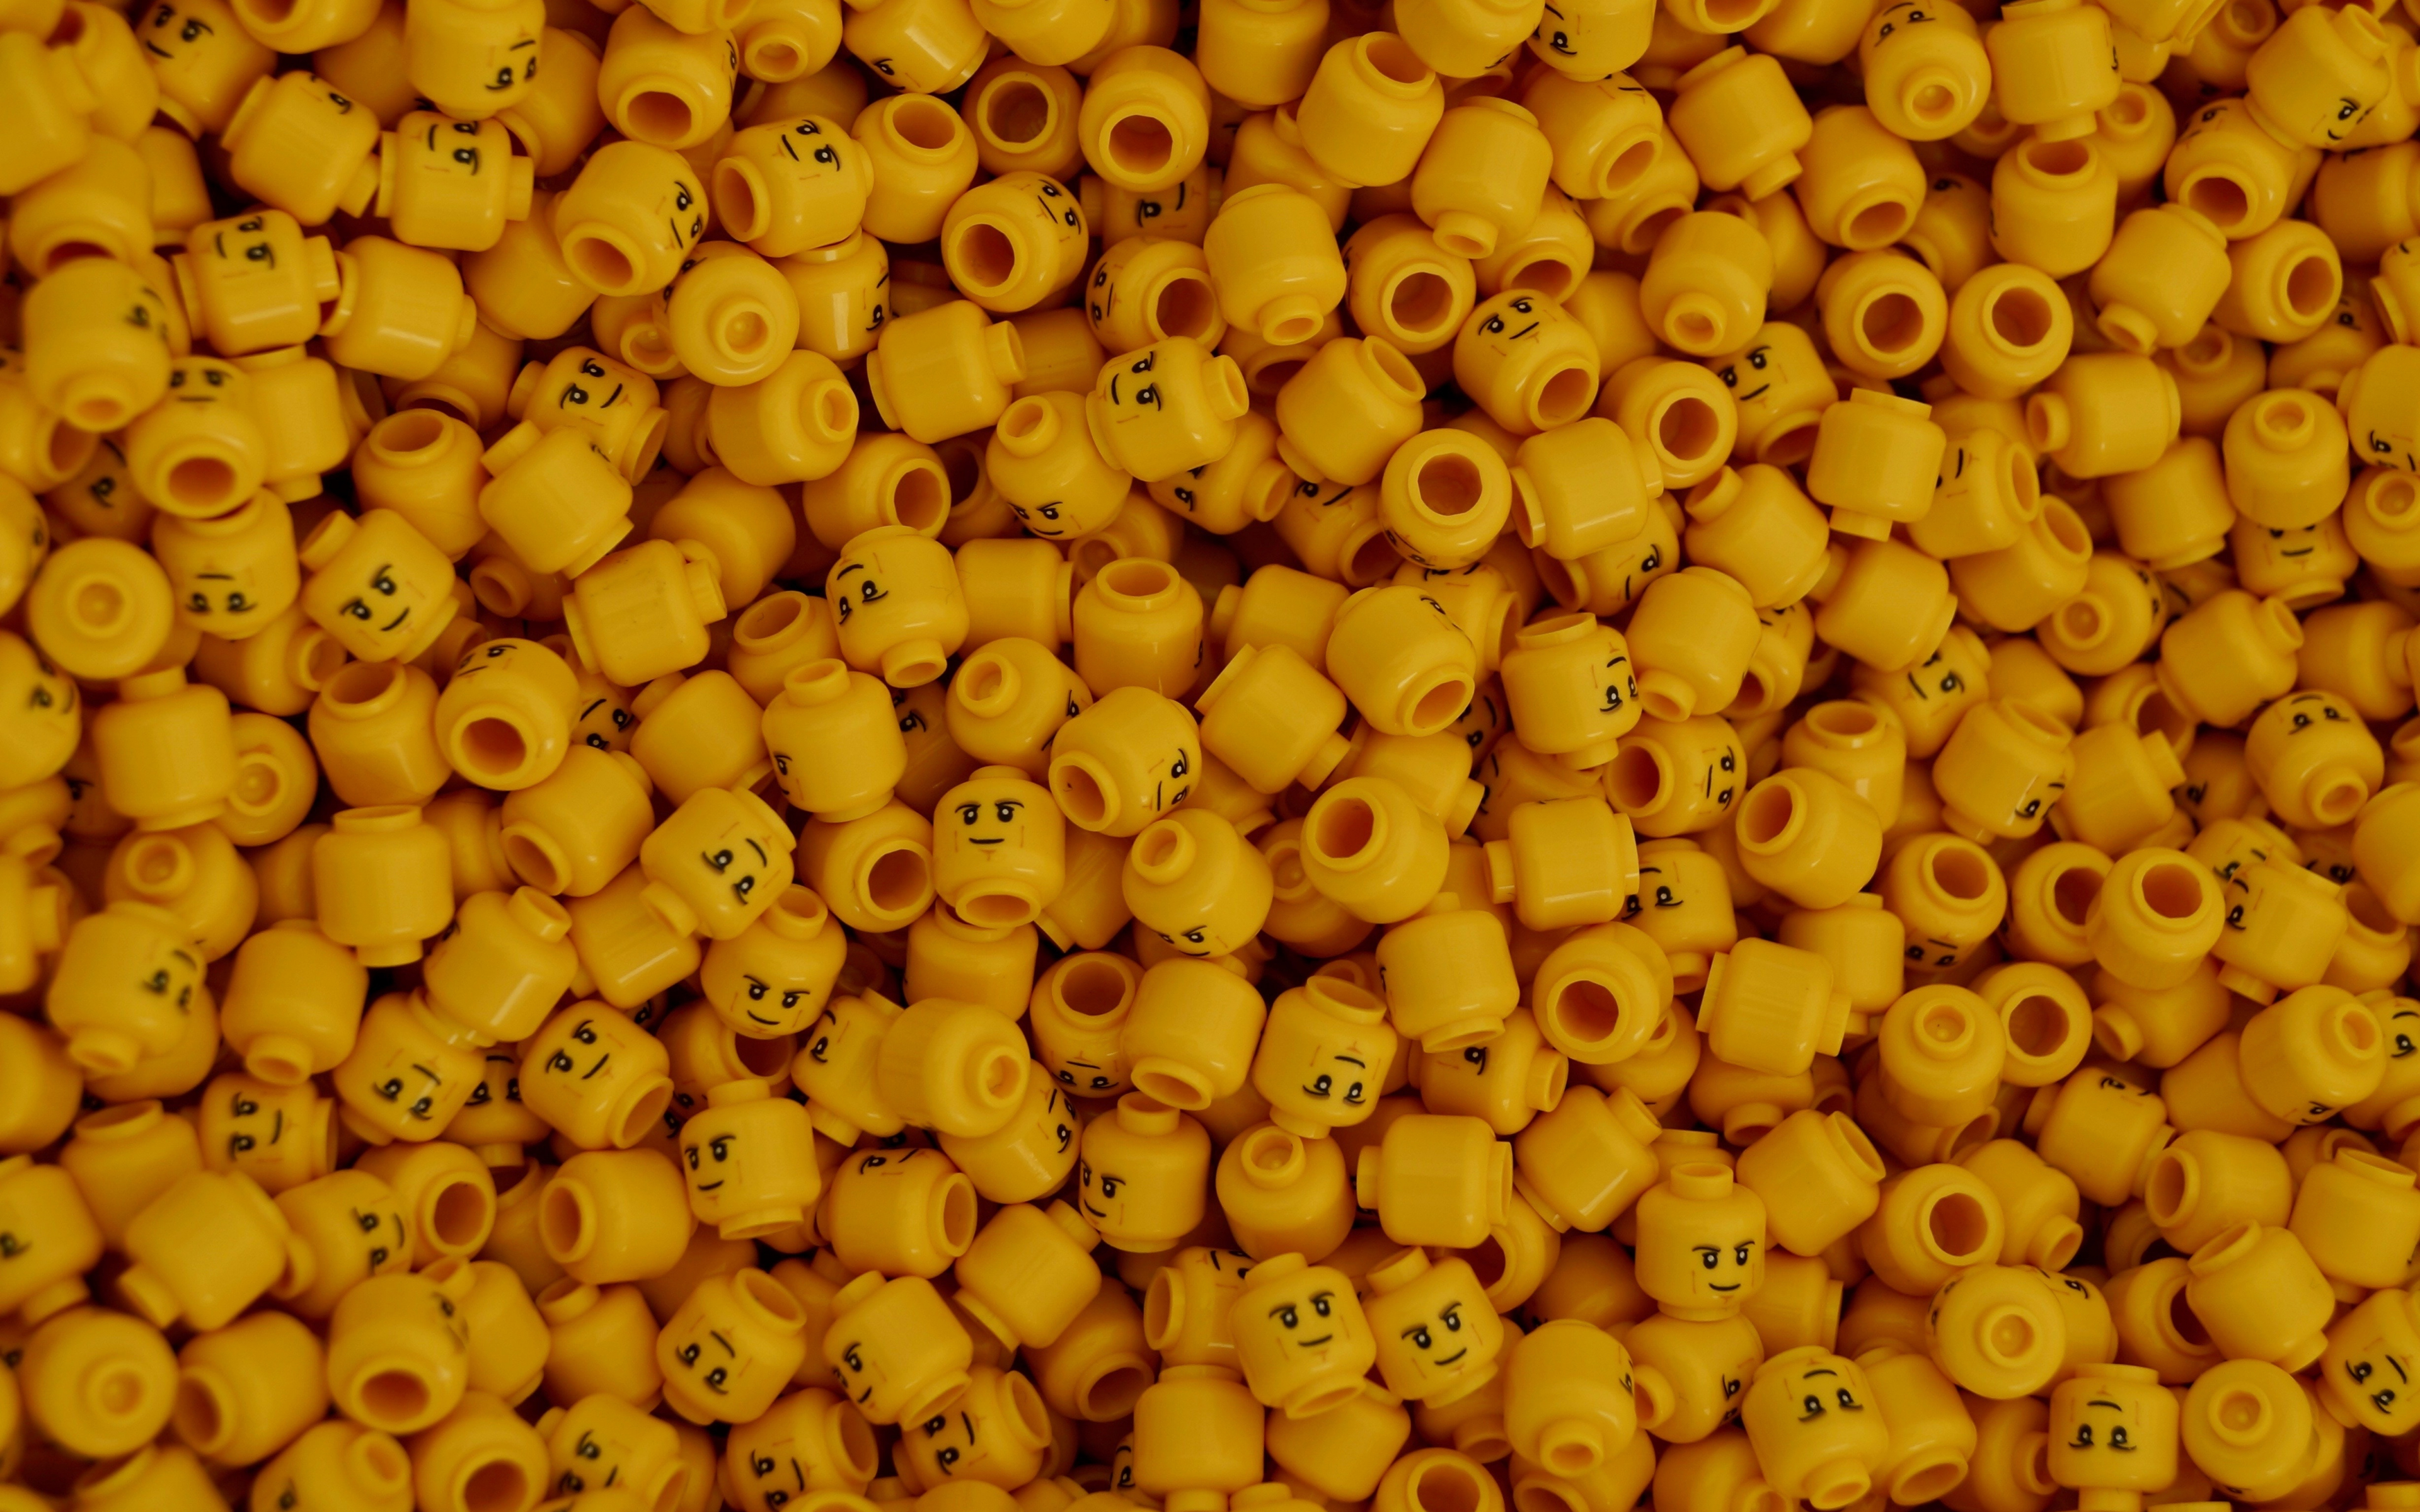 Yellow, Lego, toy, 3840x2400 wallpaper